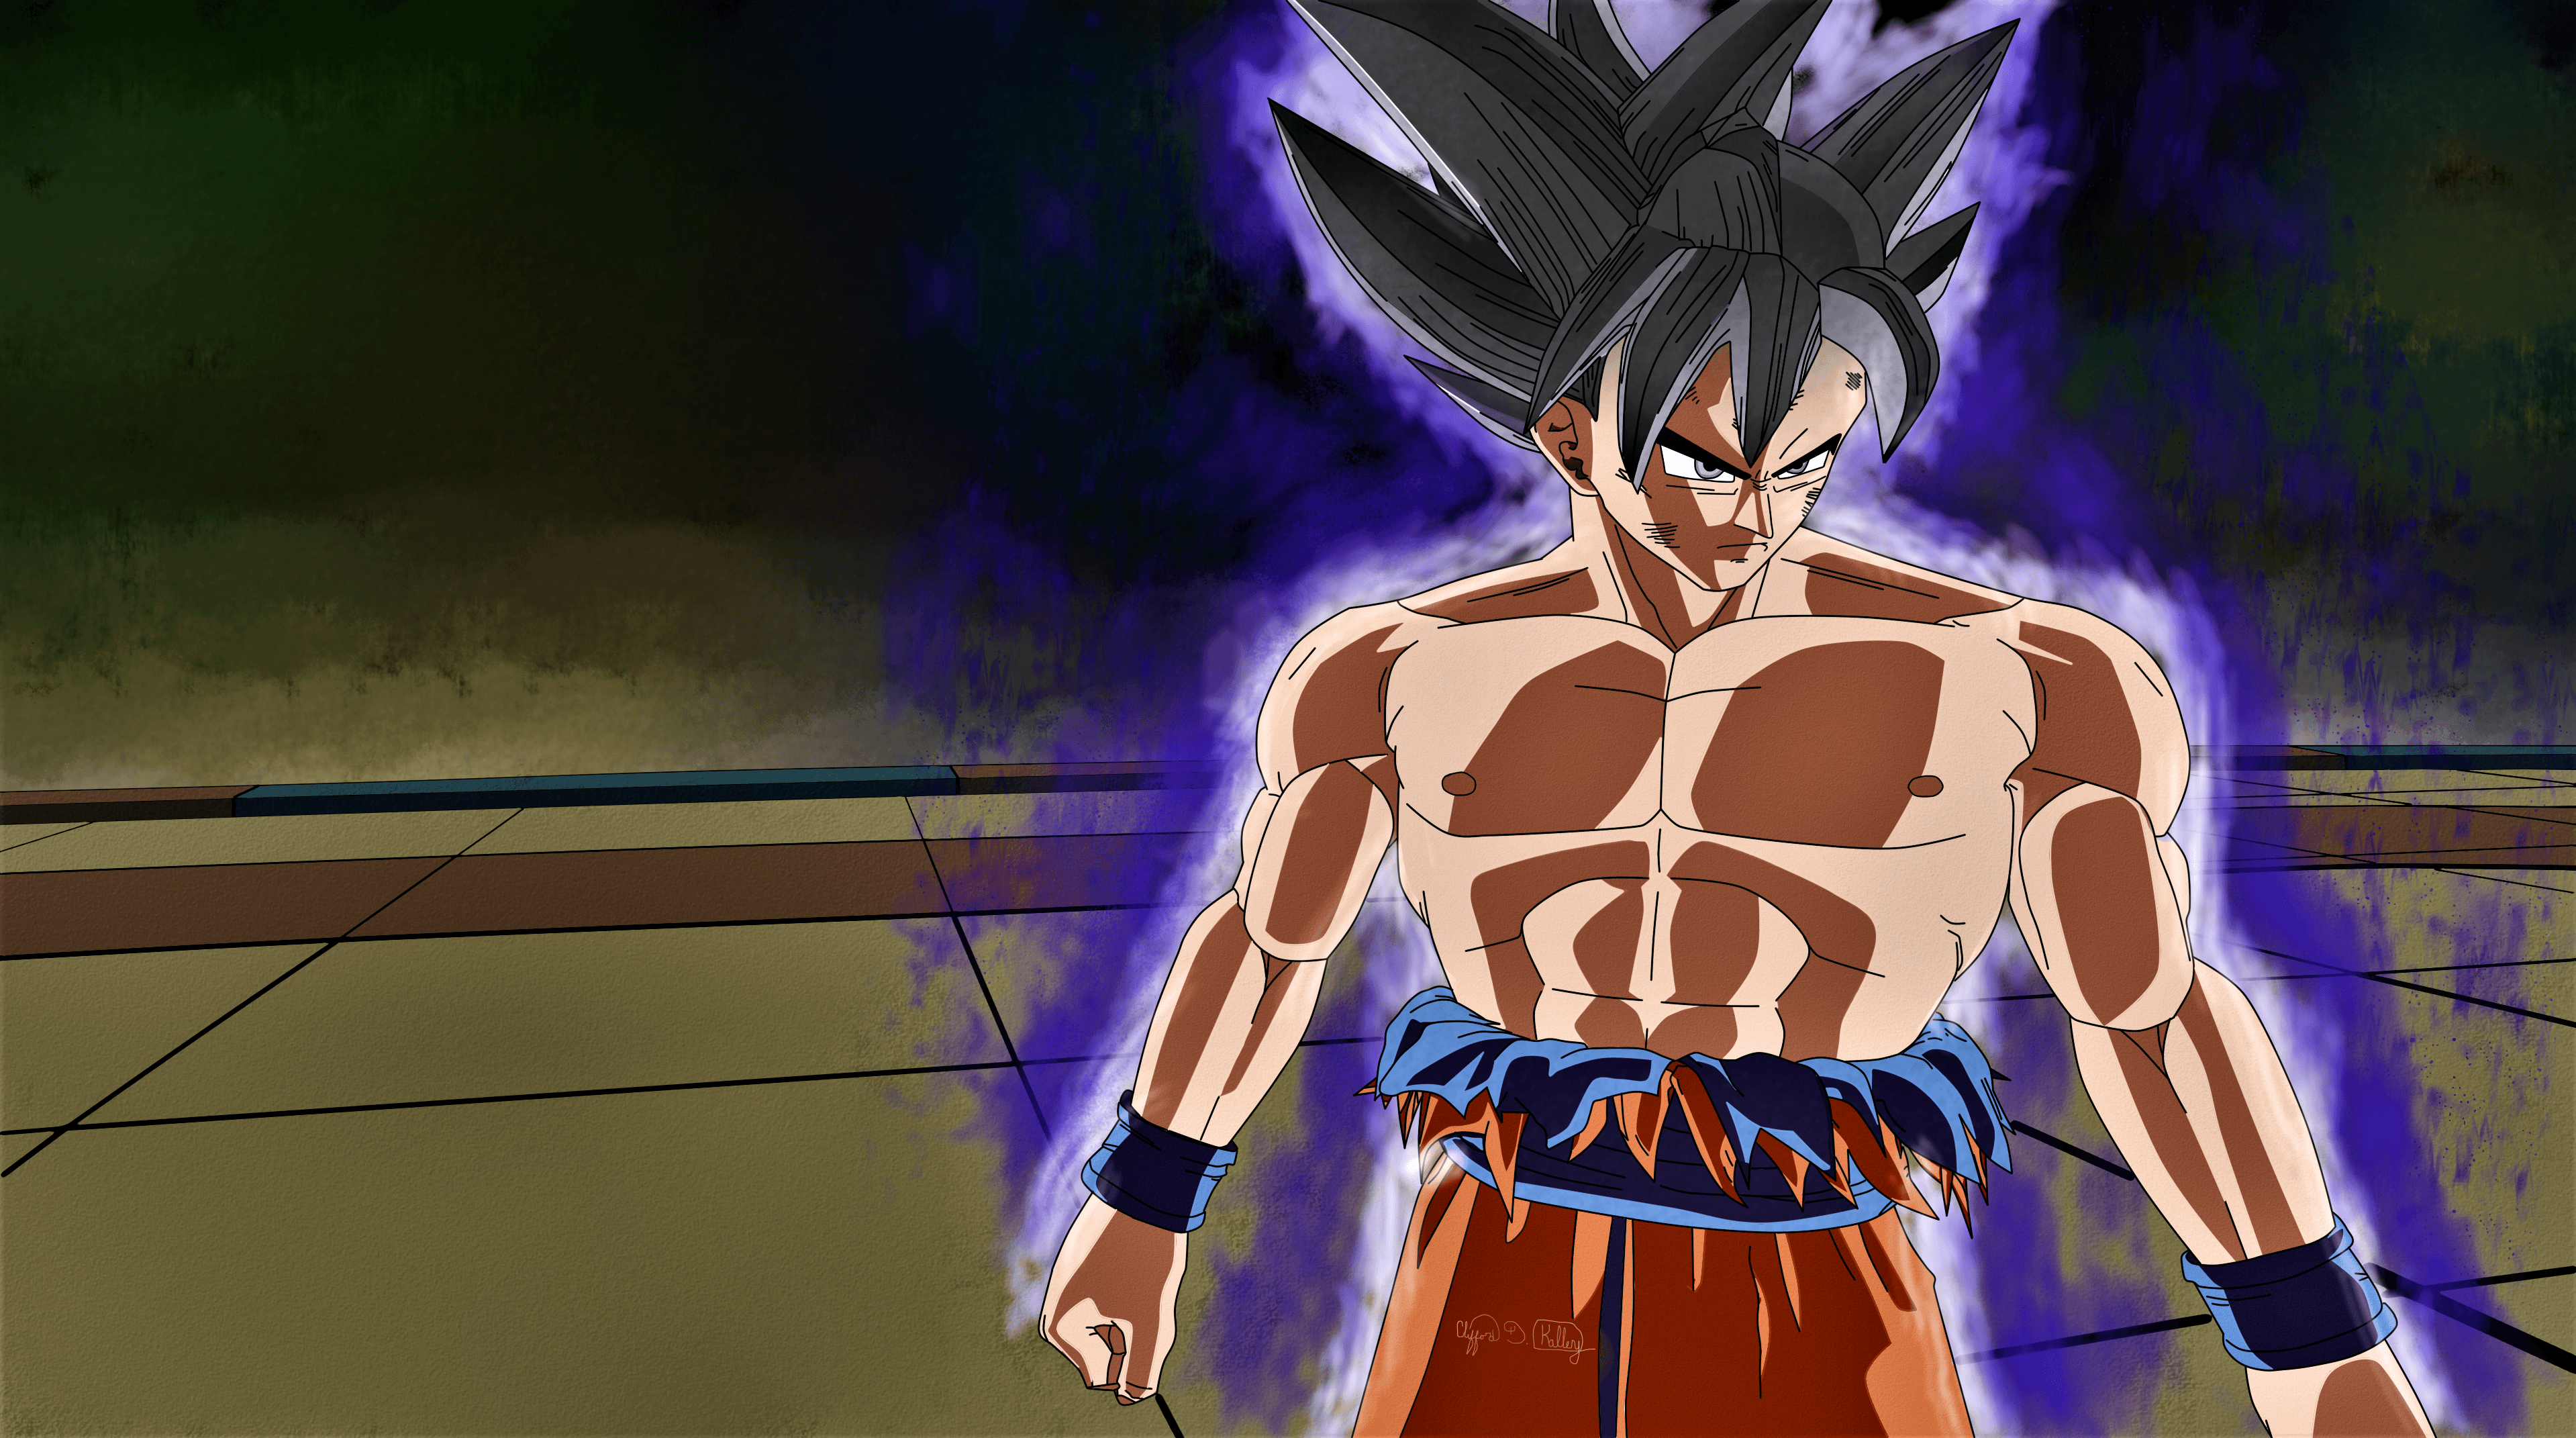 OC) (4K Wallpaper) I drew Ultra Instinct Goku in the Tournament